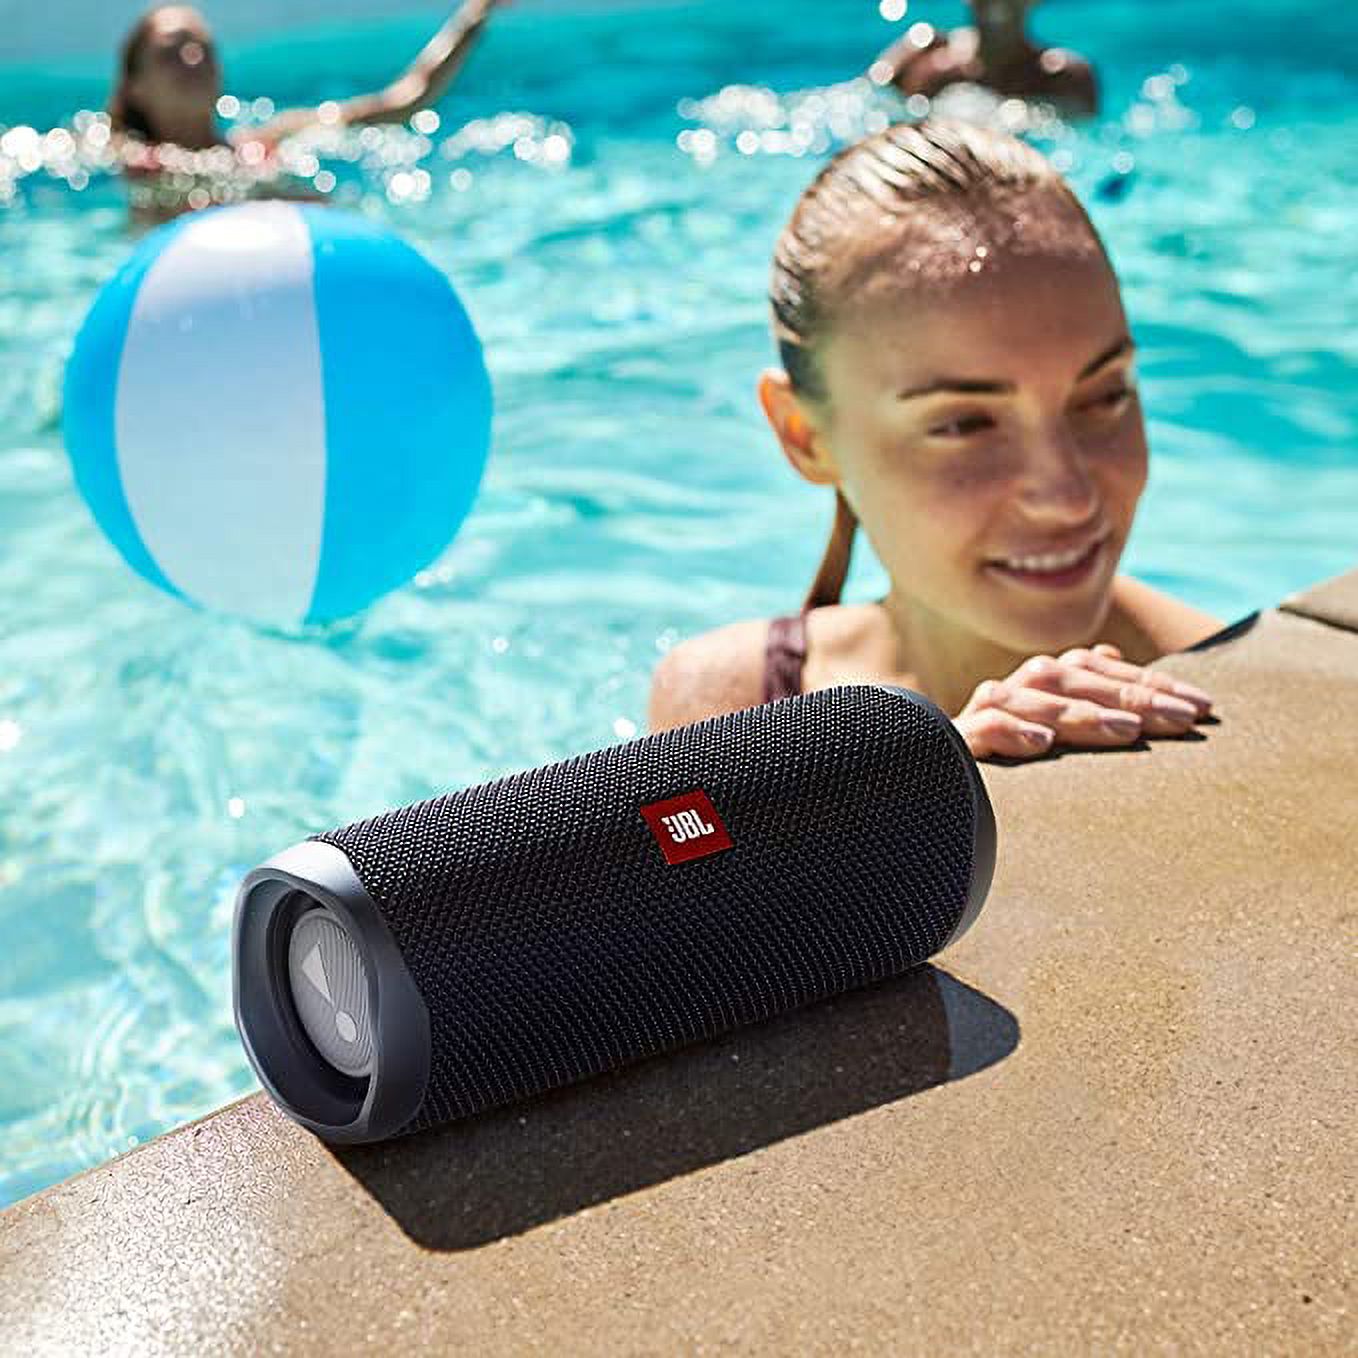 JBL Flip 5 Portable Waterproof Wireless Bluetooth Speaker - Black - image 4 of 4